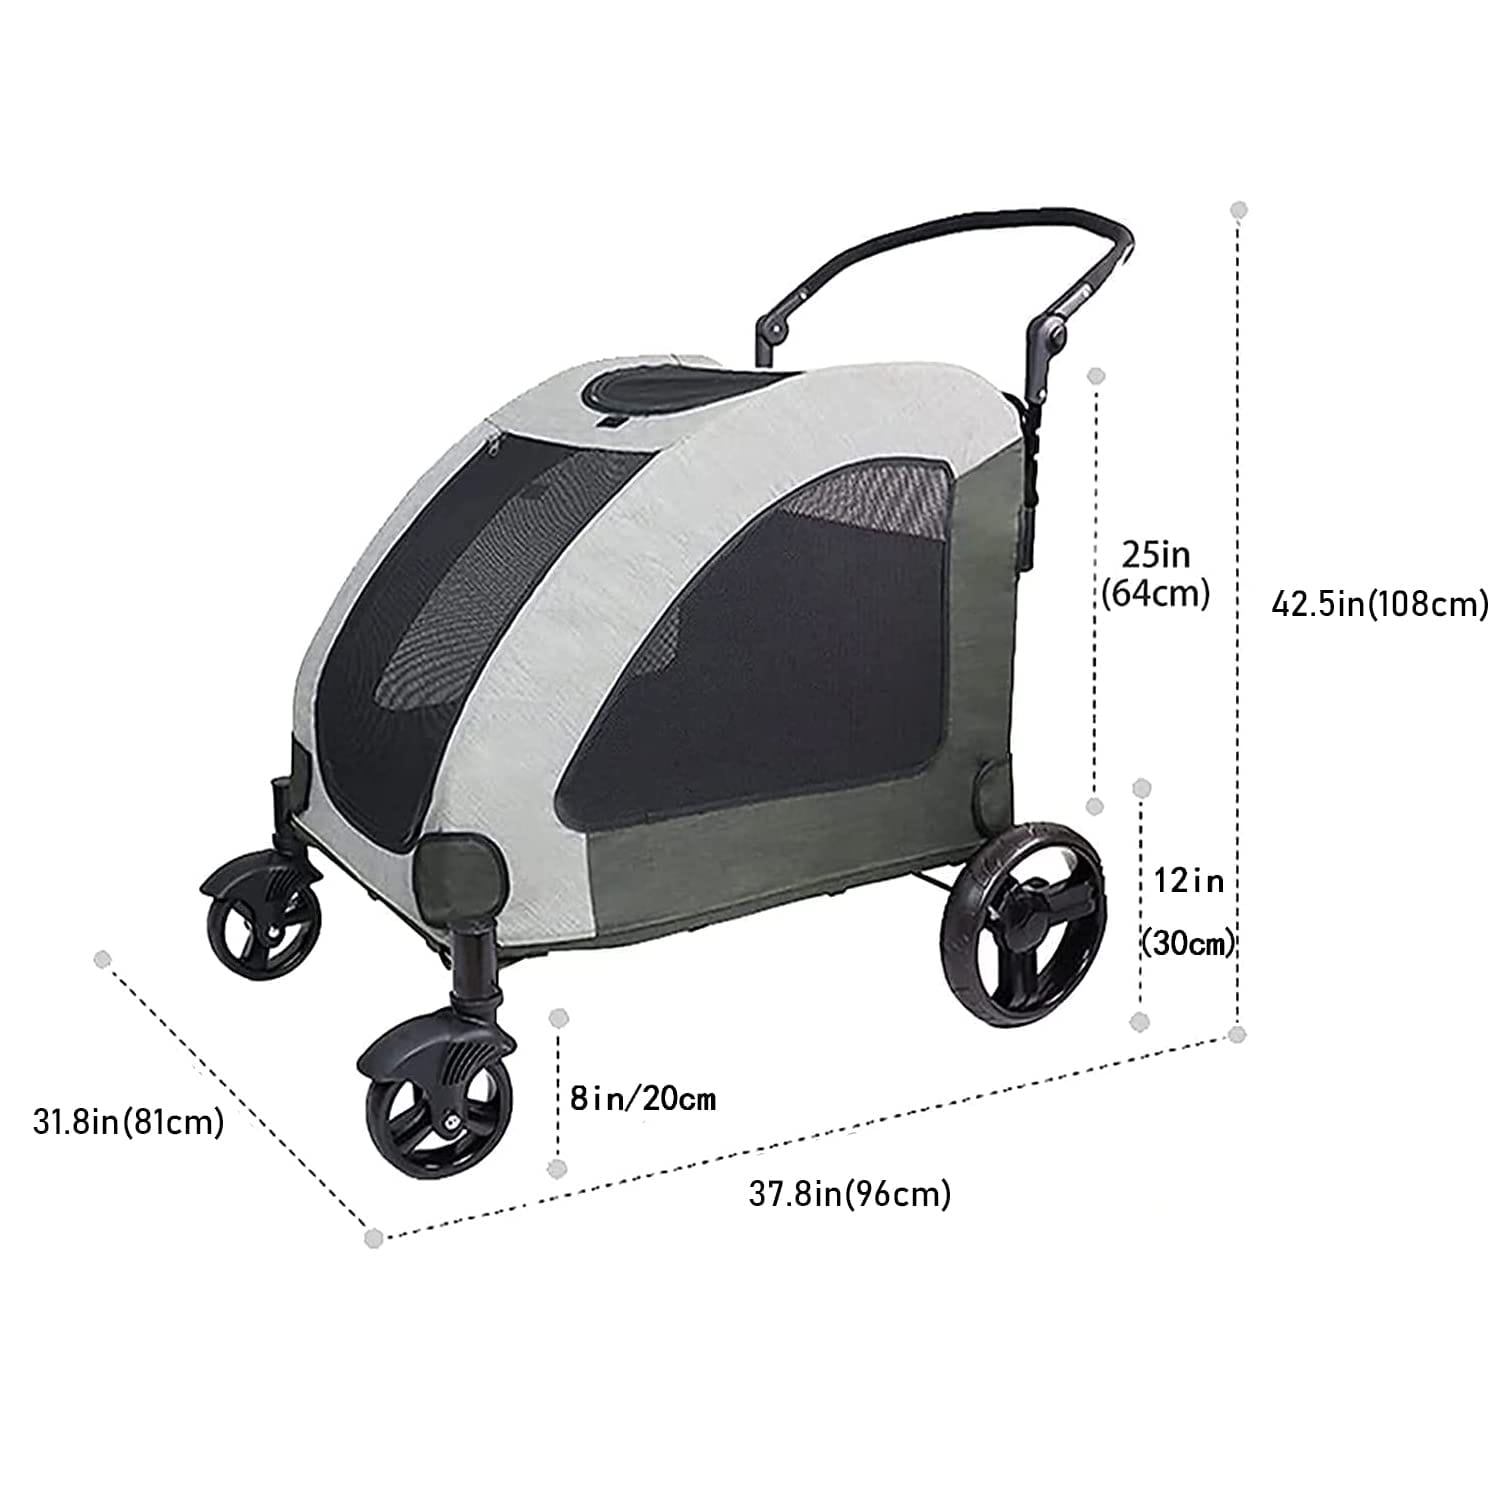 myoyay dog stroller review 1